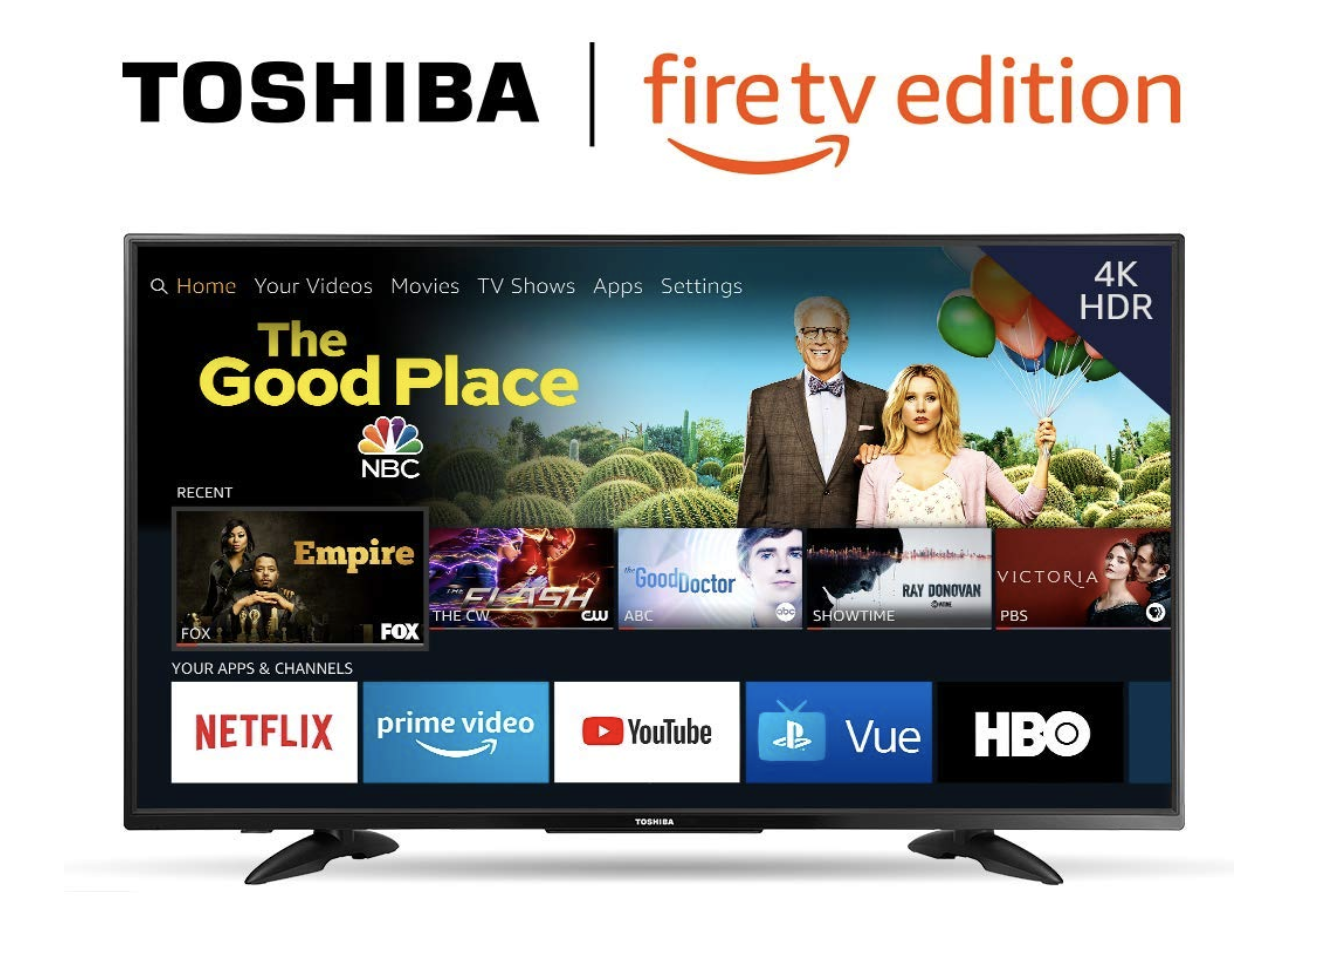  TOSHIBA 43LF711U20 43-inch 4K Ultra HD Smart LED TV HDR-Fire TV Edition